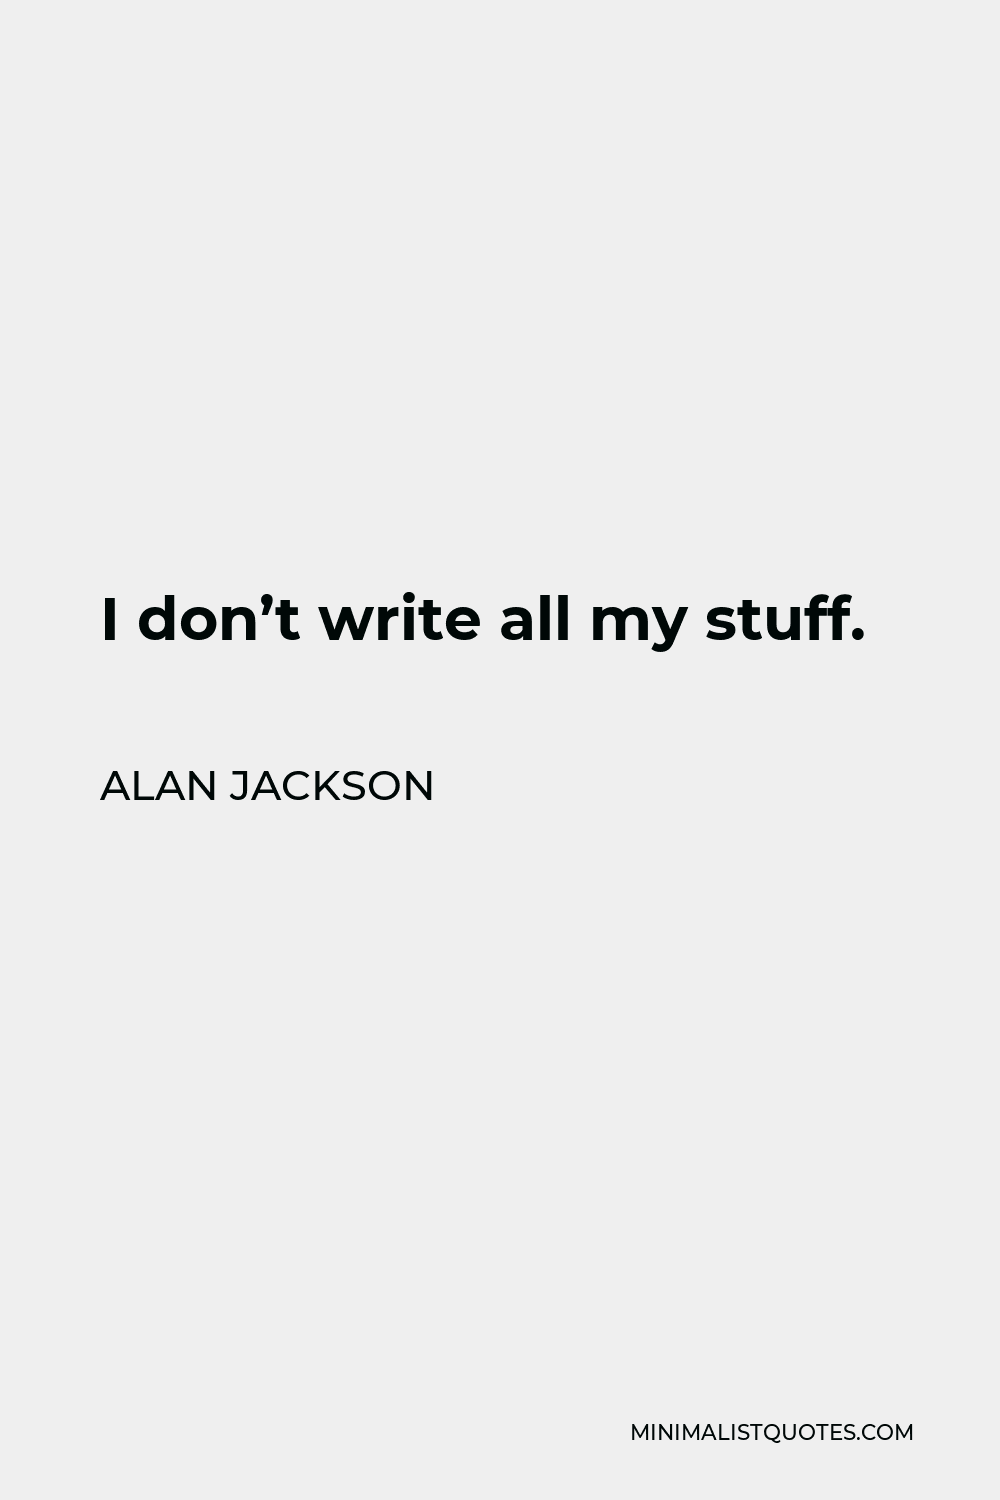 Alan Jackson Quote - I don’t write all my stuff.